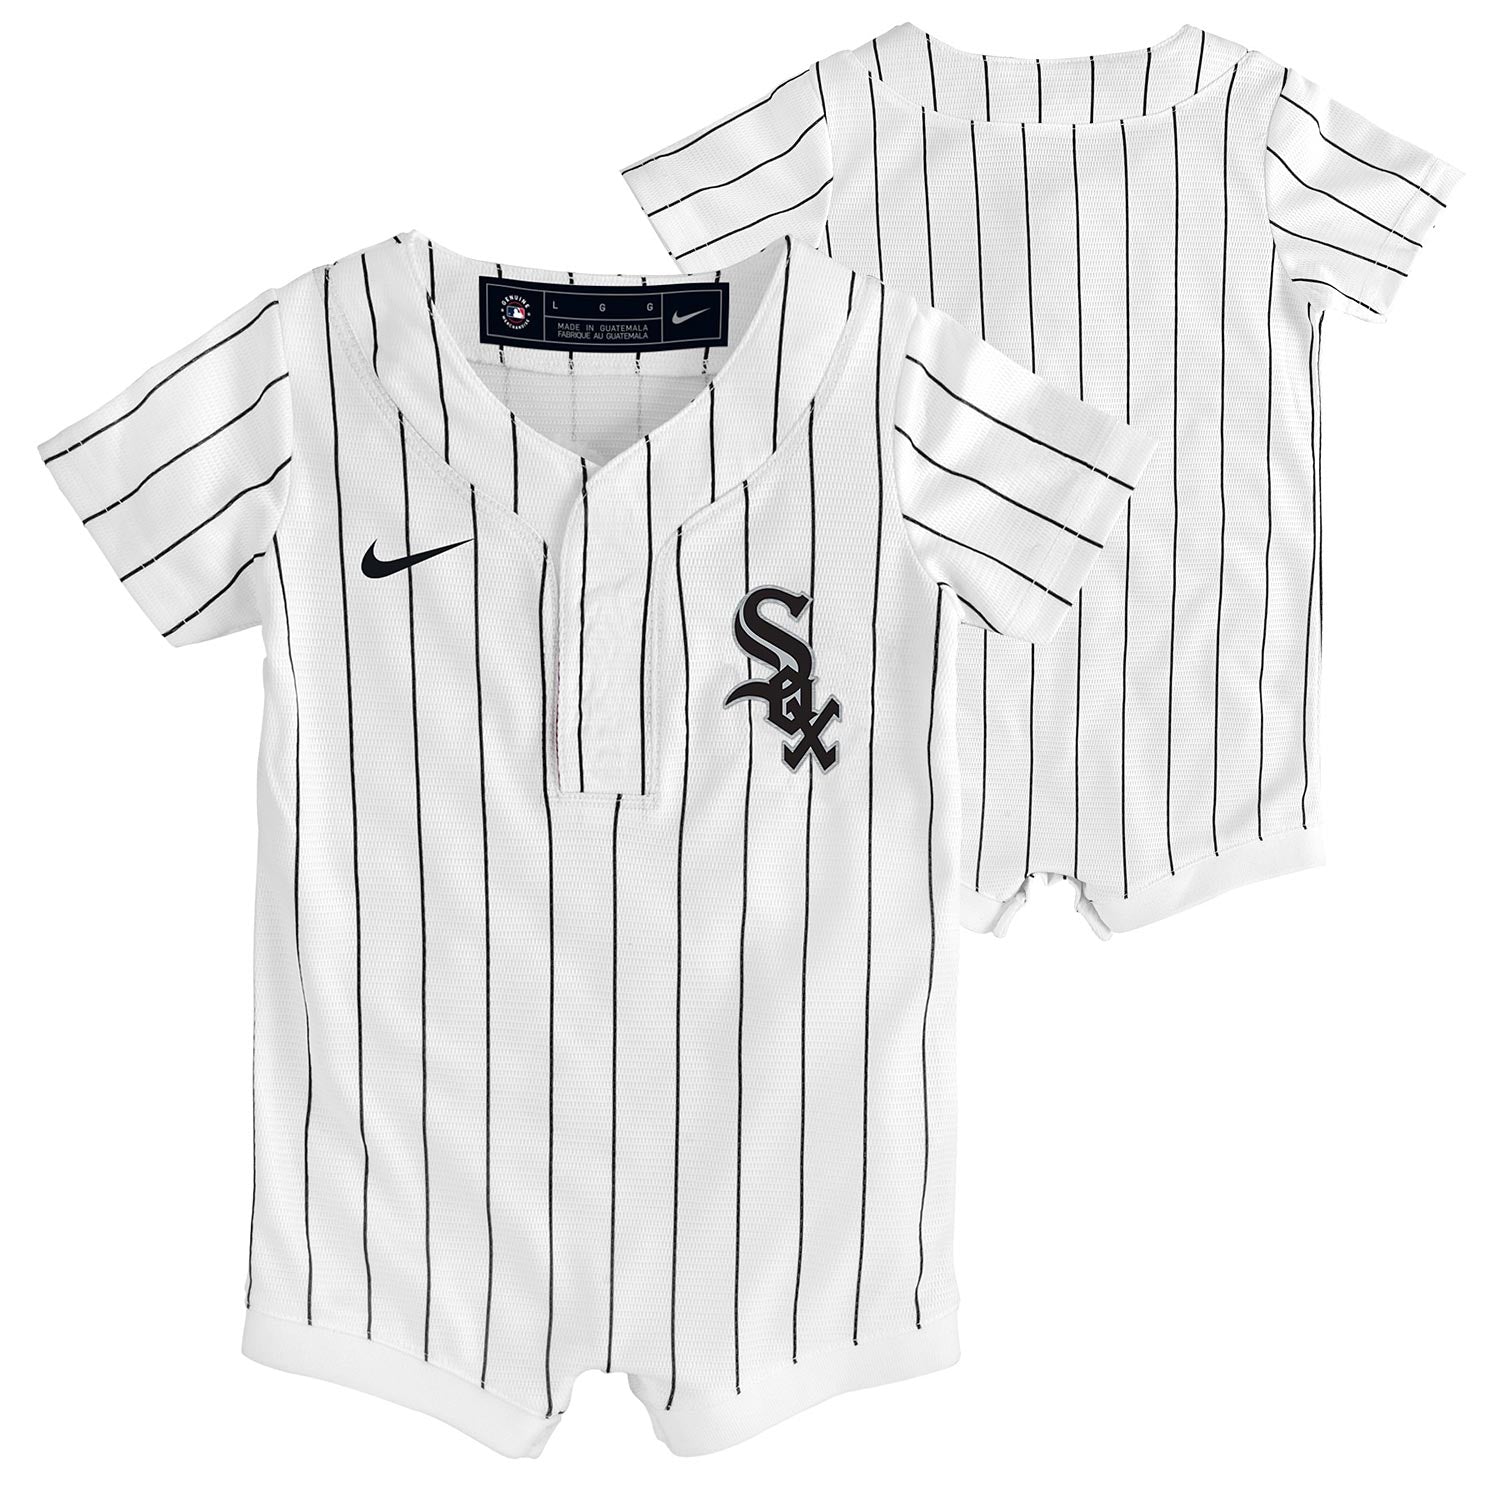 Chicago White Sox Nike Alternate Replica Team Jersey - Black